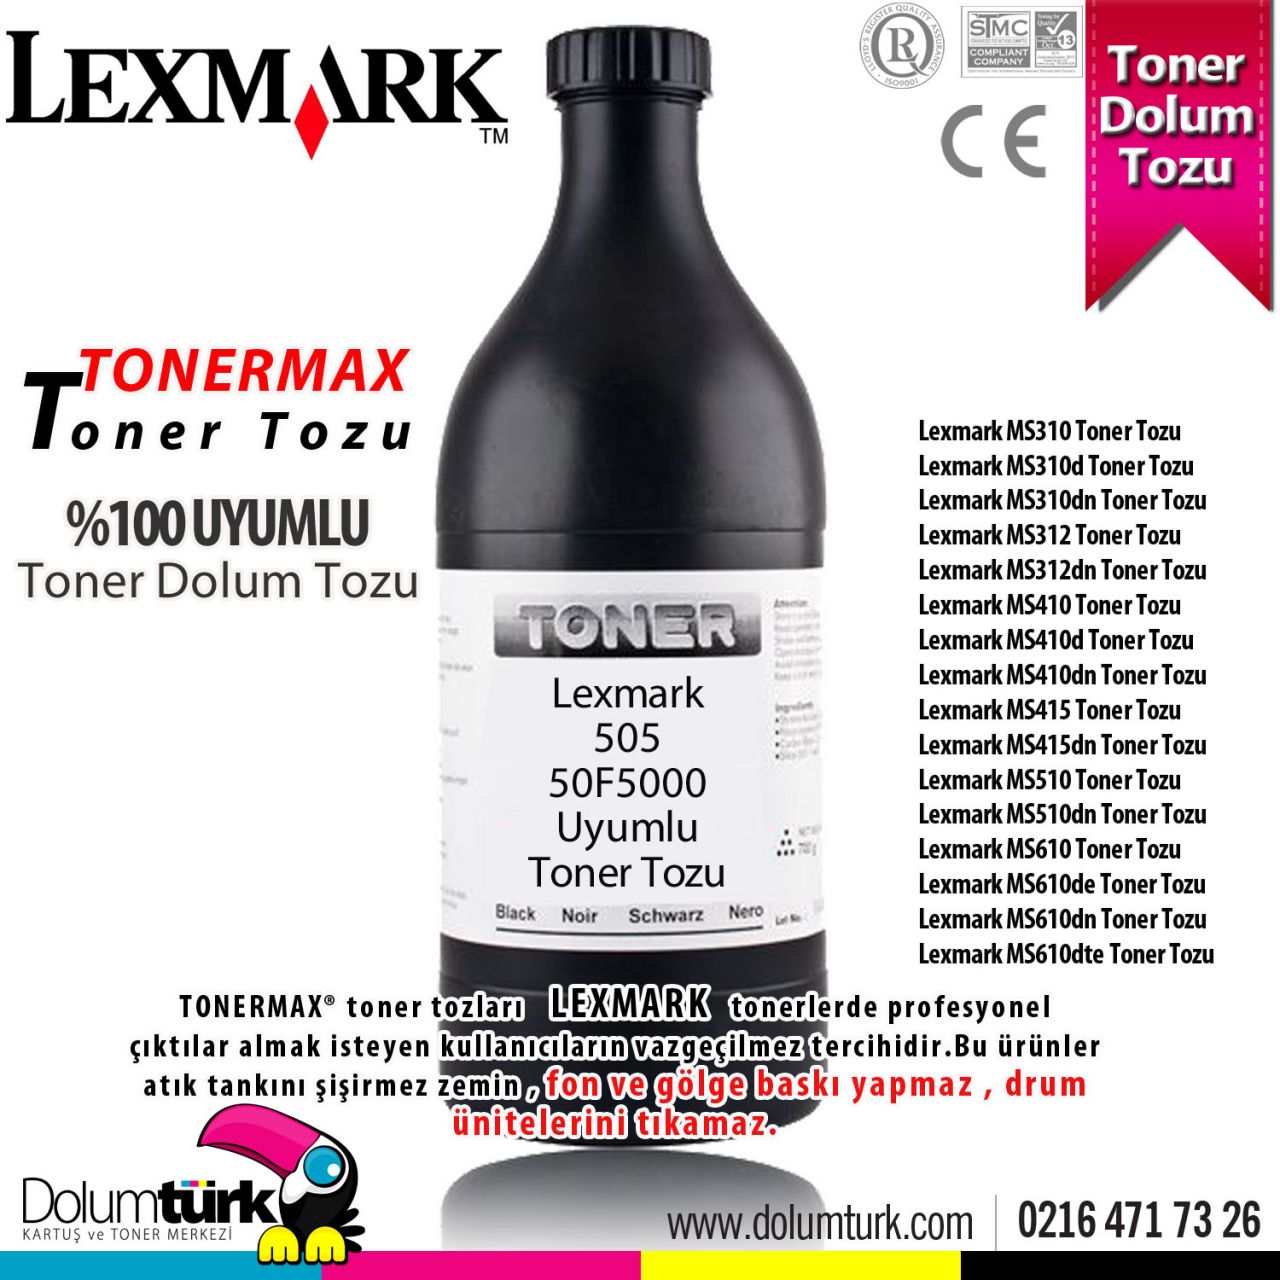 Lexmark MS310 / MS410 / MS510 / MS610 Toner Tozu